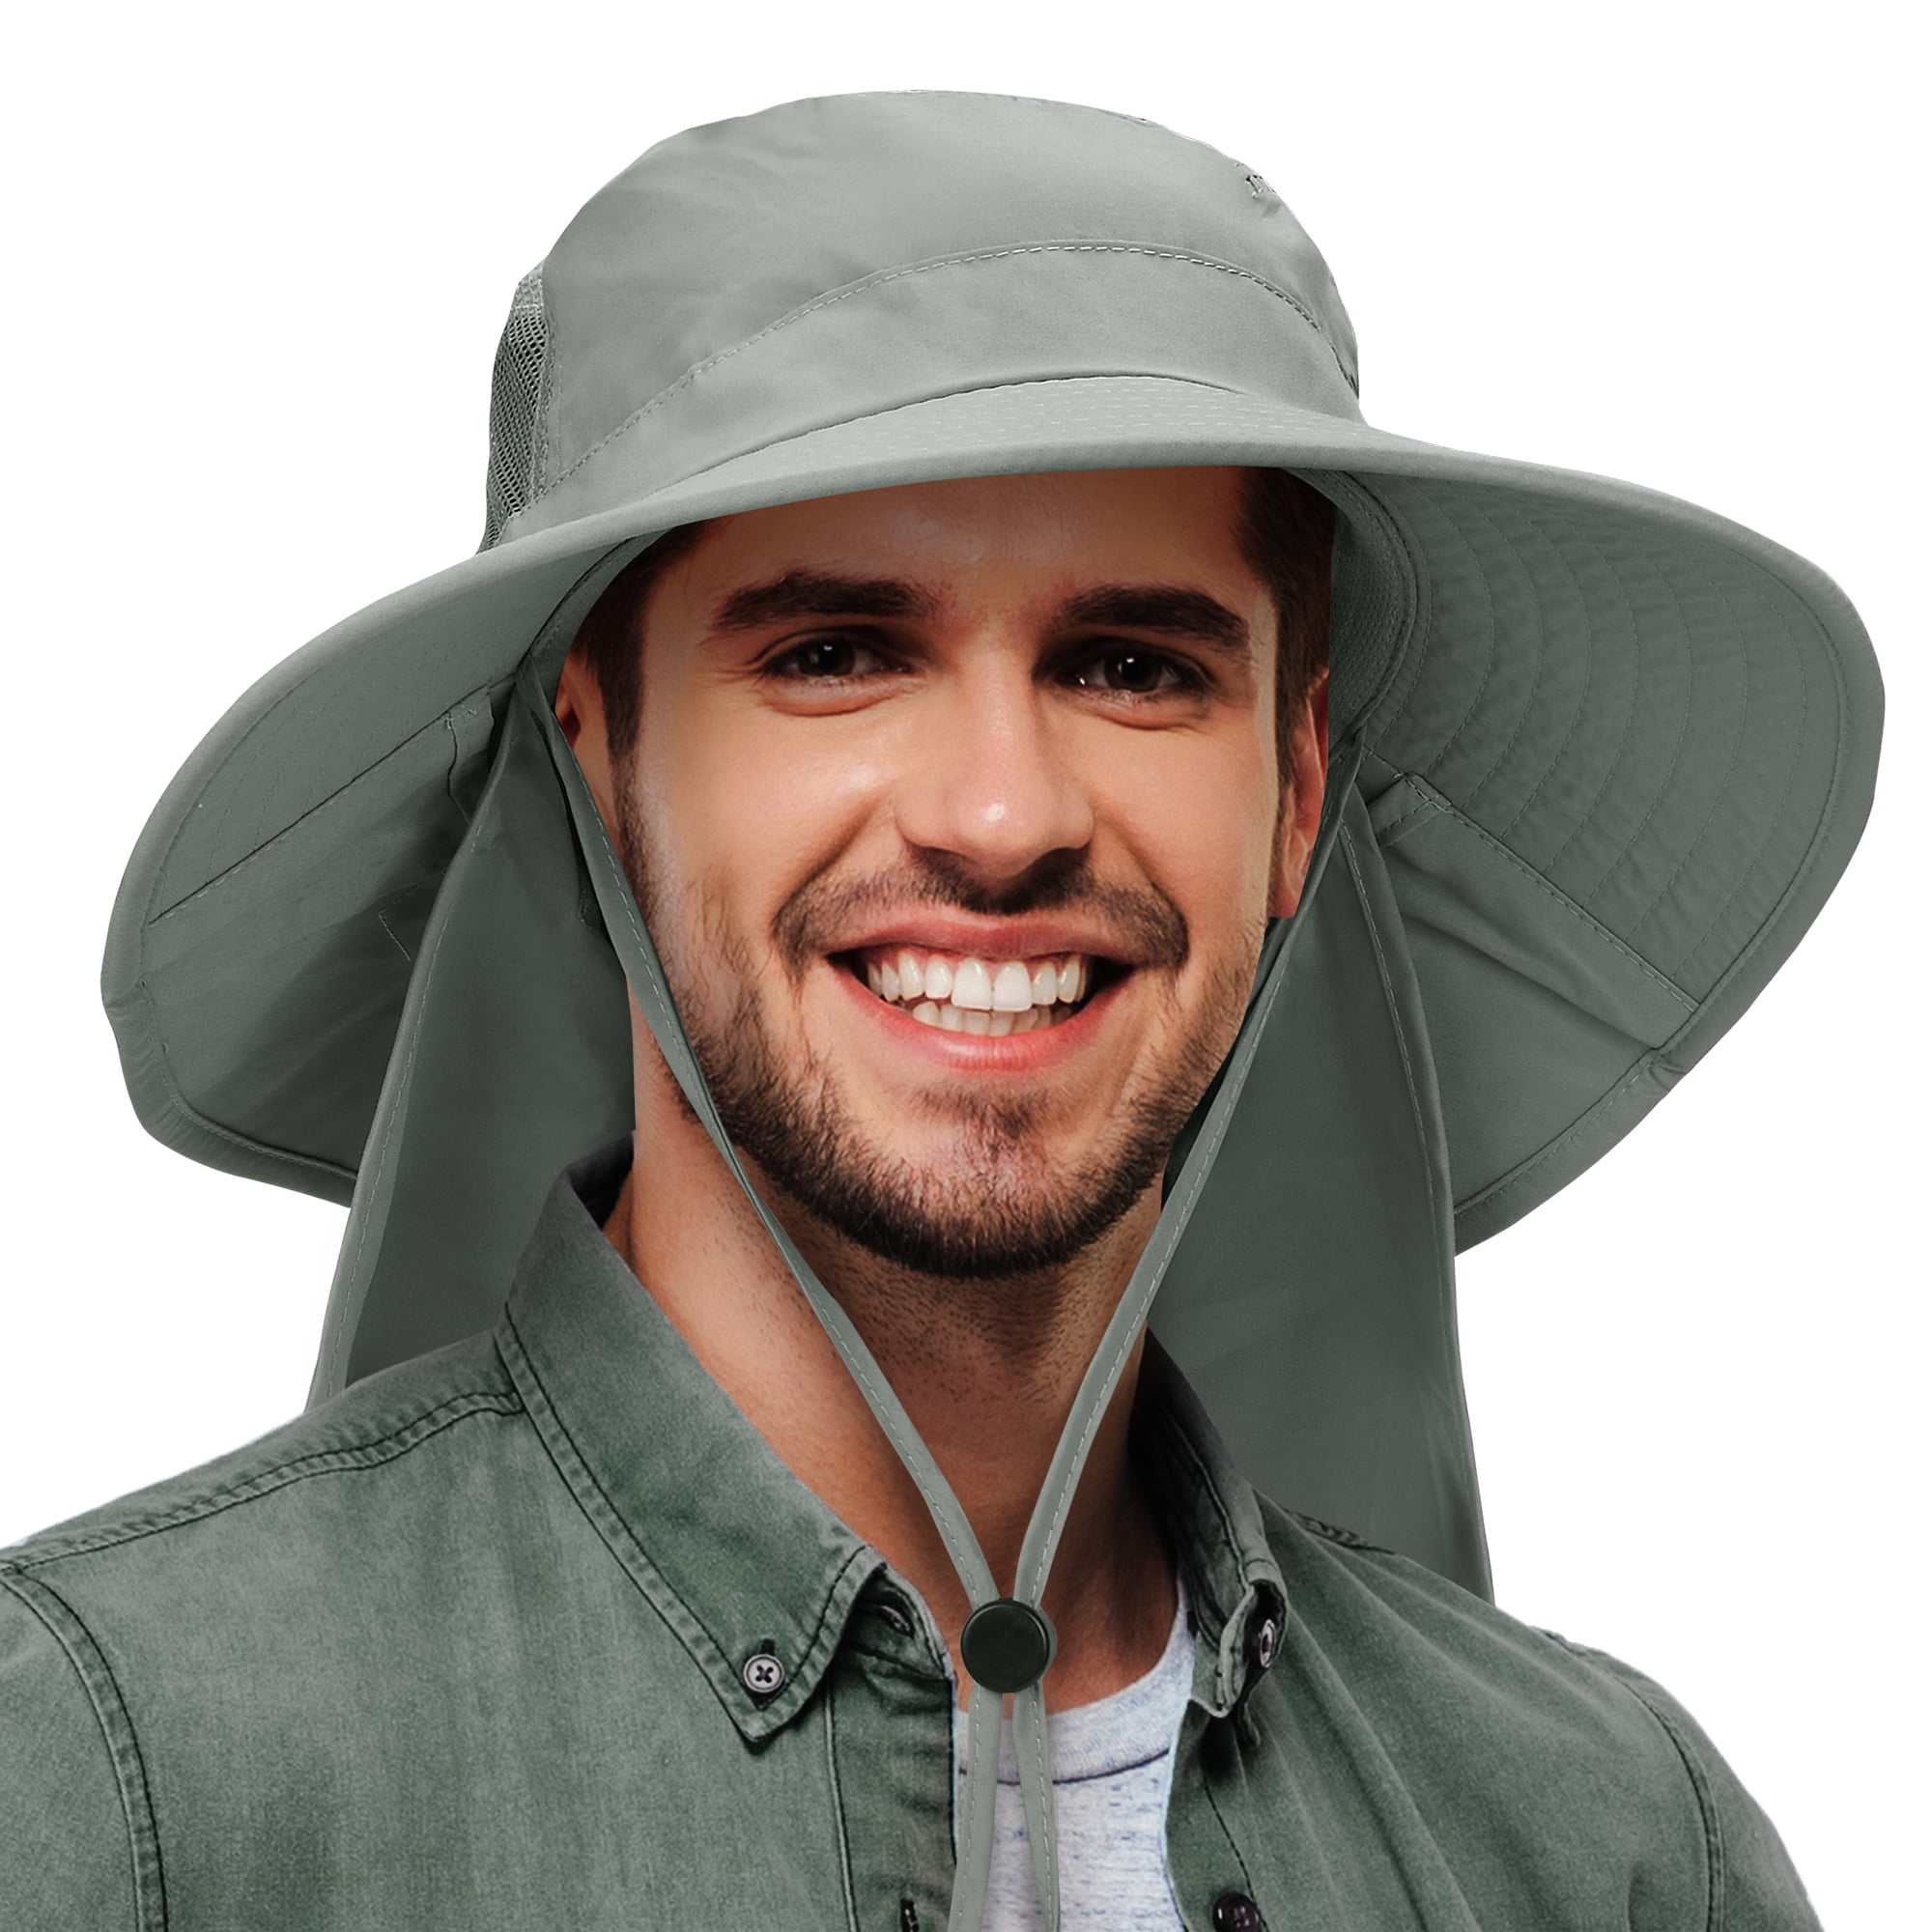 Sun Blocker Outdoor Sun Protection Fishing Cap with Neck Flap Wide Brim Hat for Men Women Baseball, Backpacking, Cycling, Hiking, Garden, Hunting